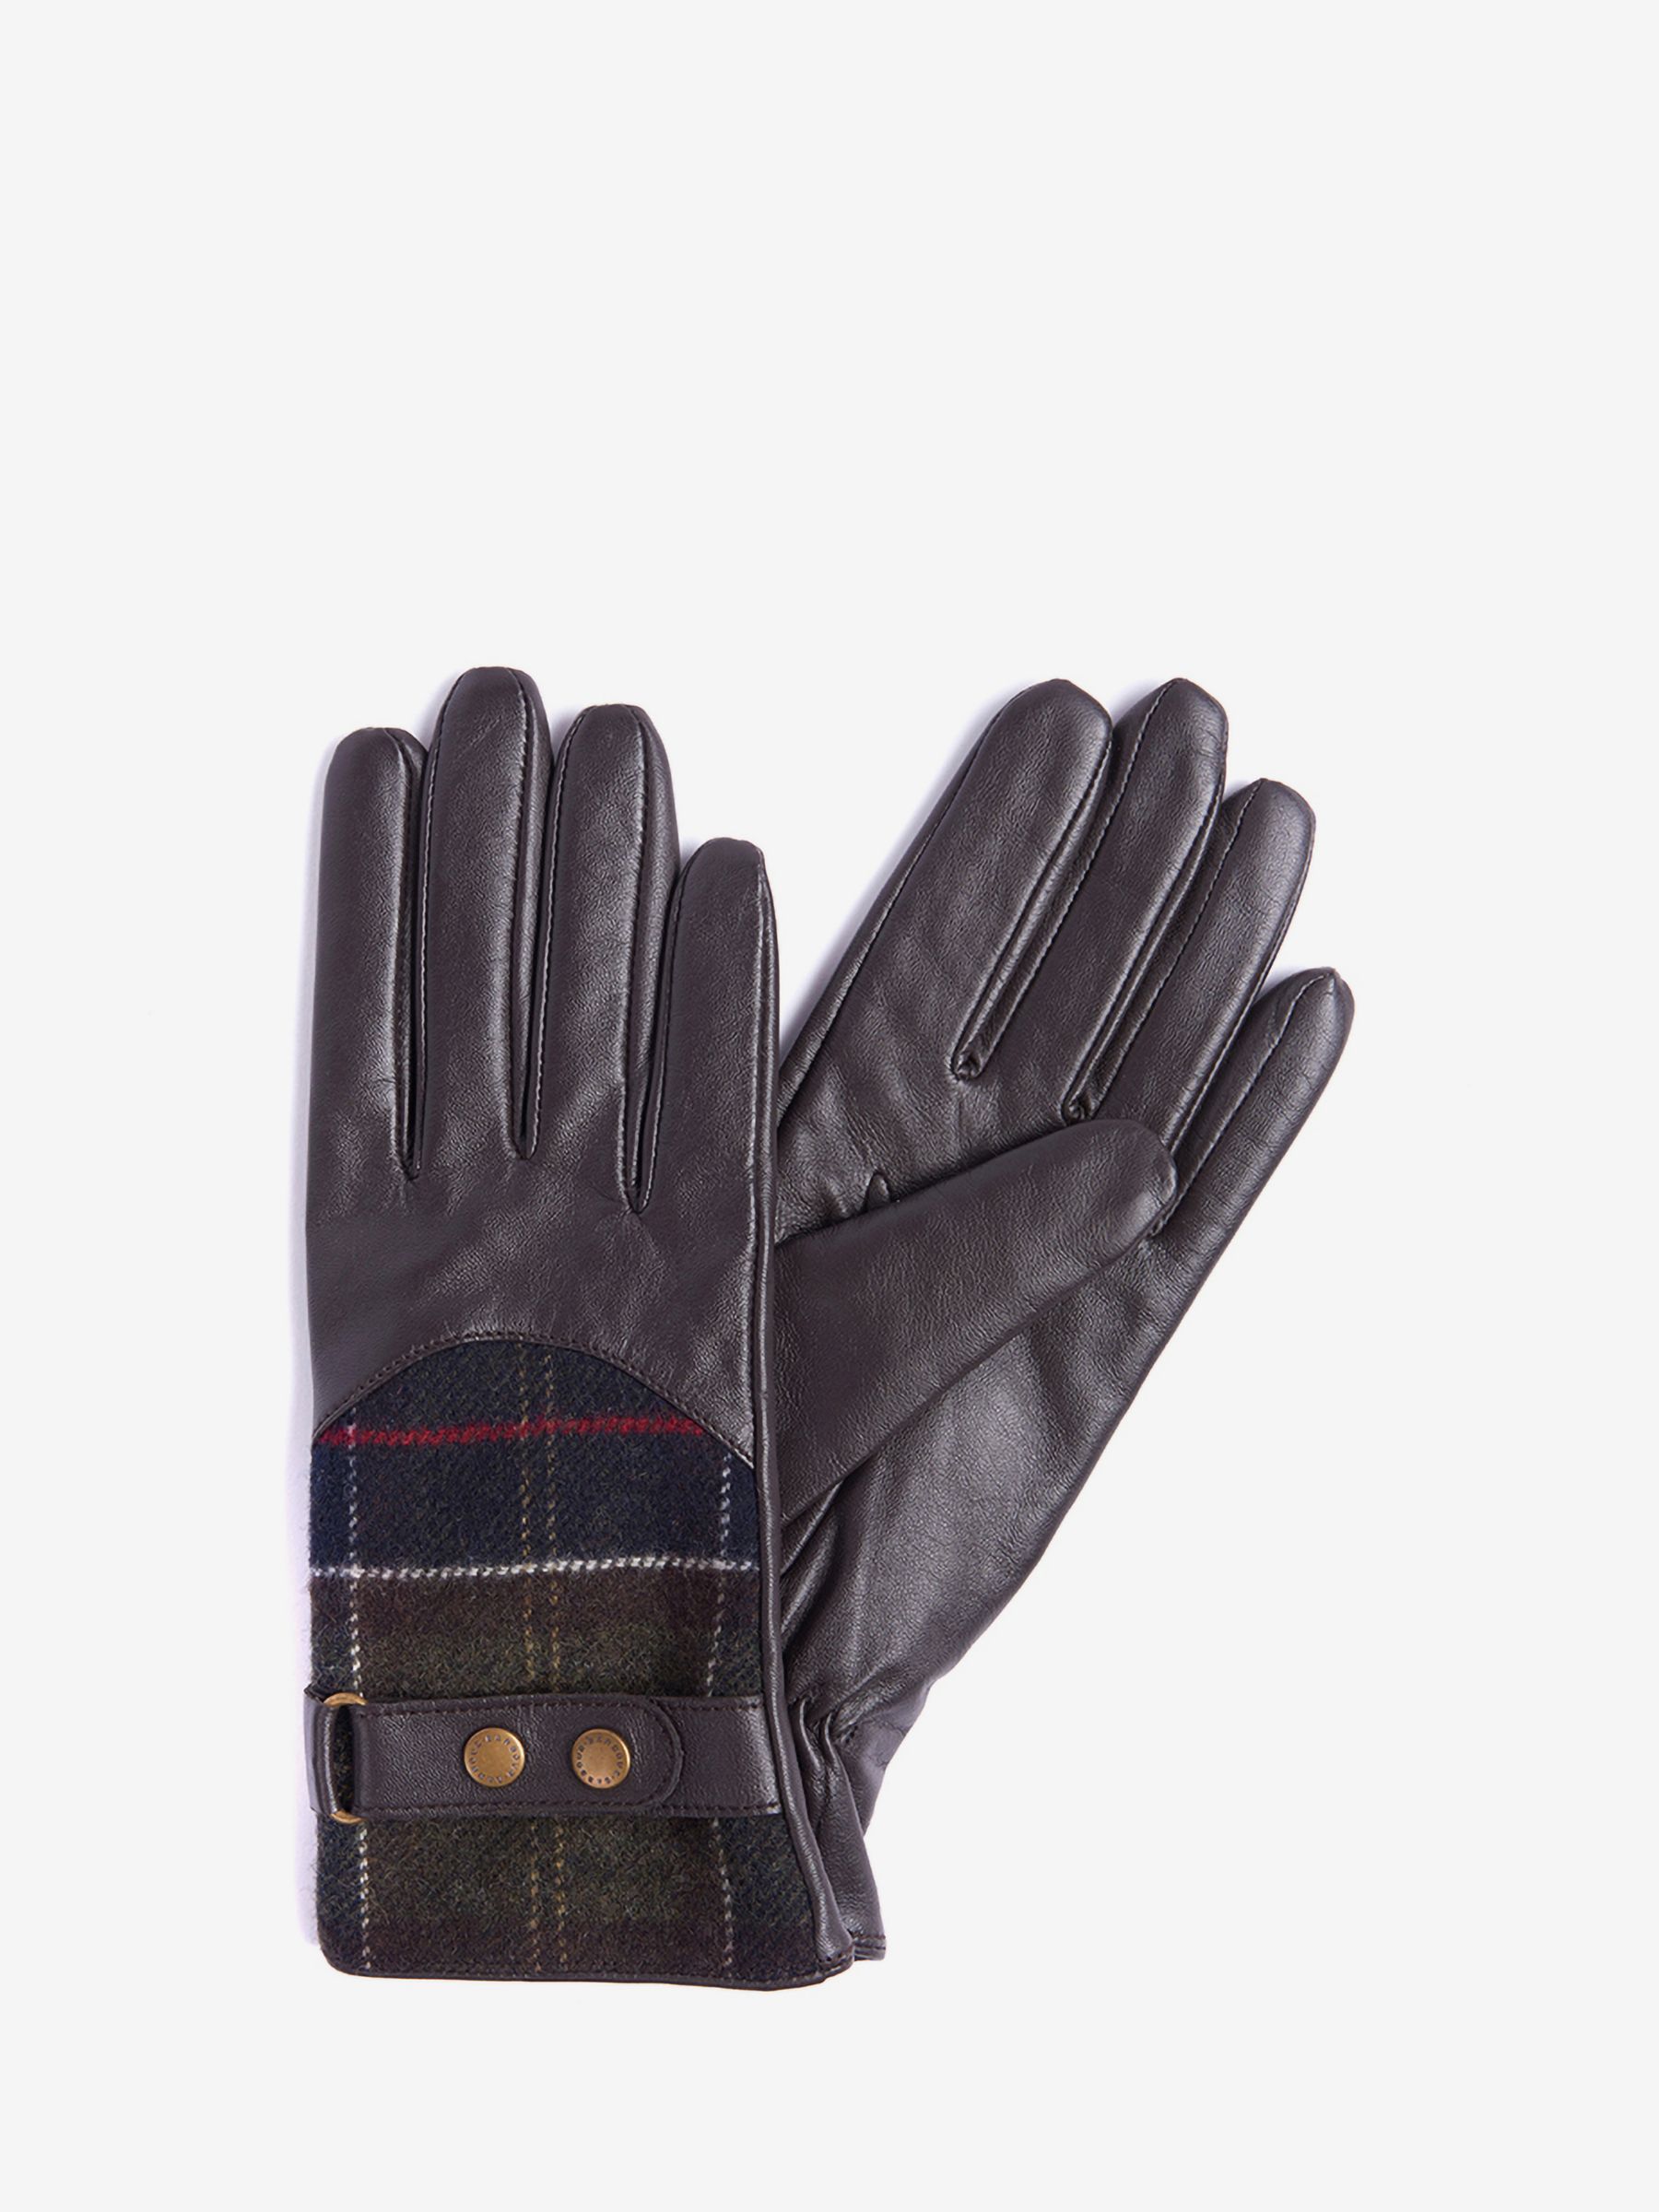 Barbour Dee Tartan Leather Gloves, Dark Brown at John Lewis & Partners